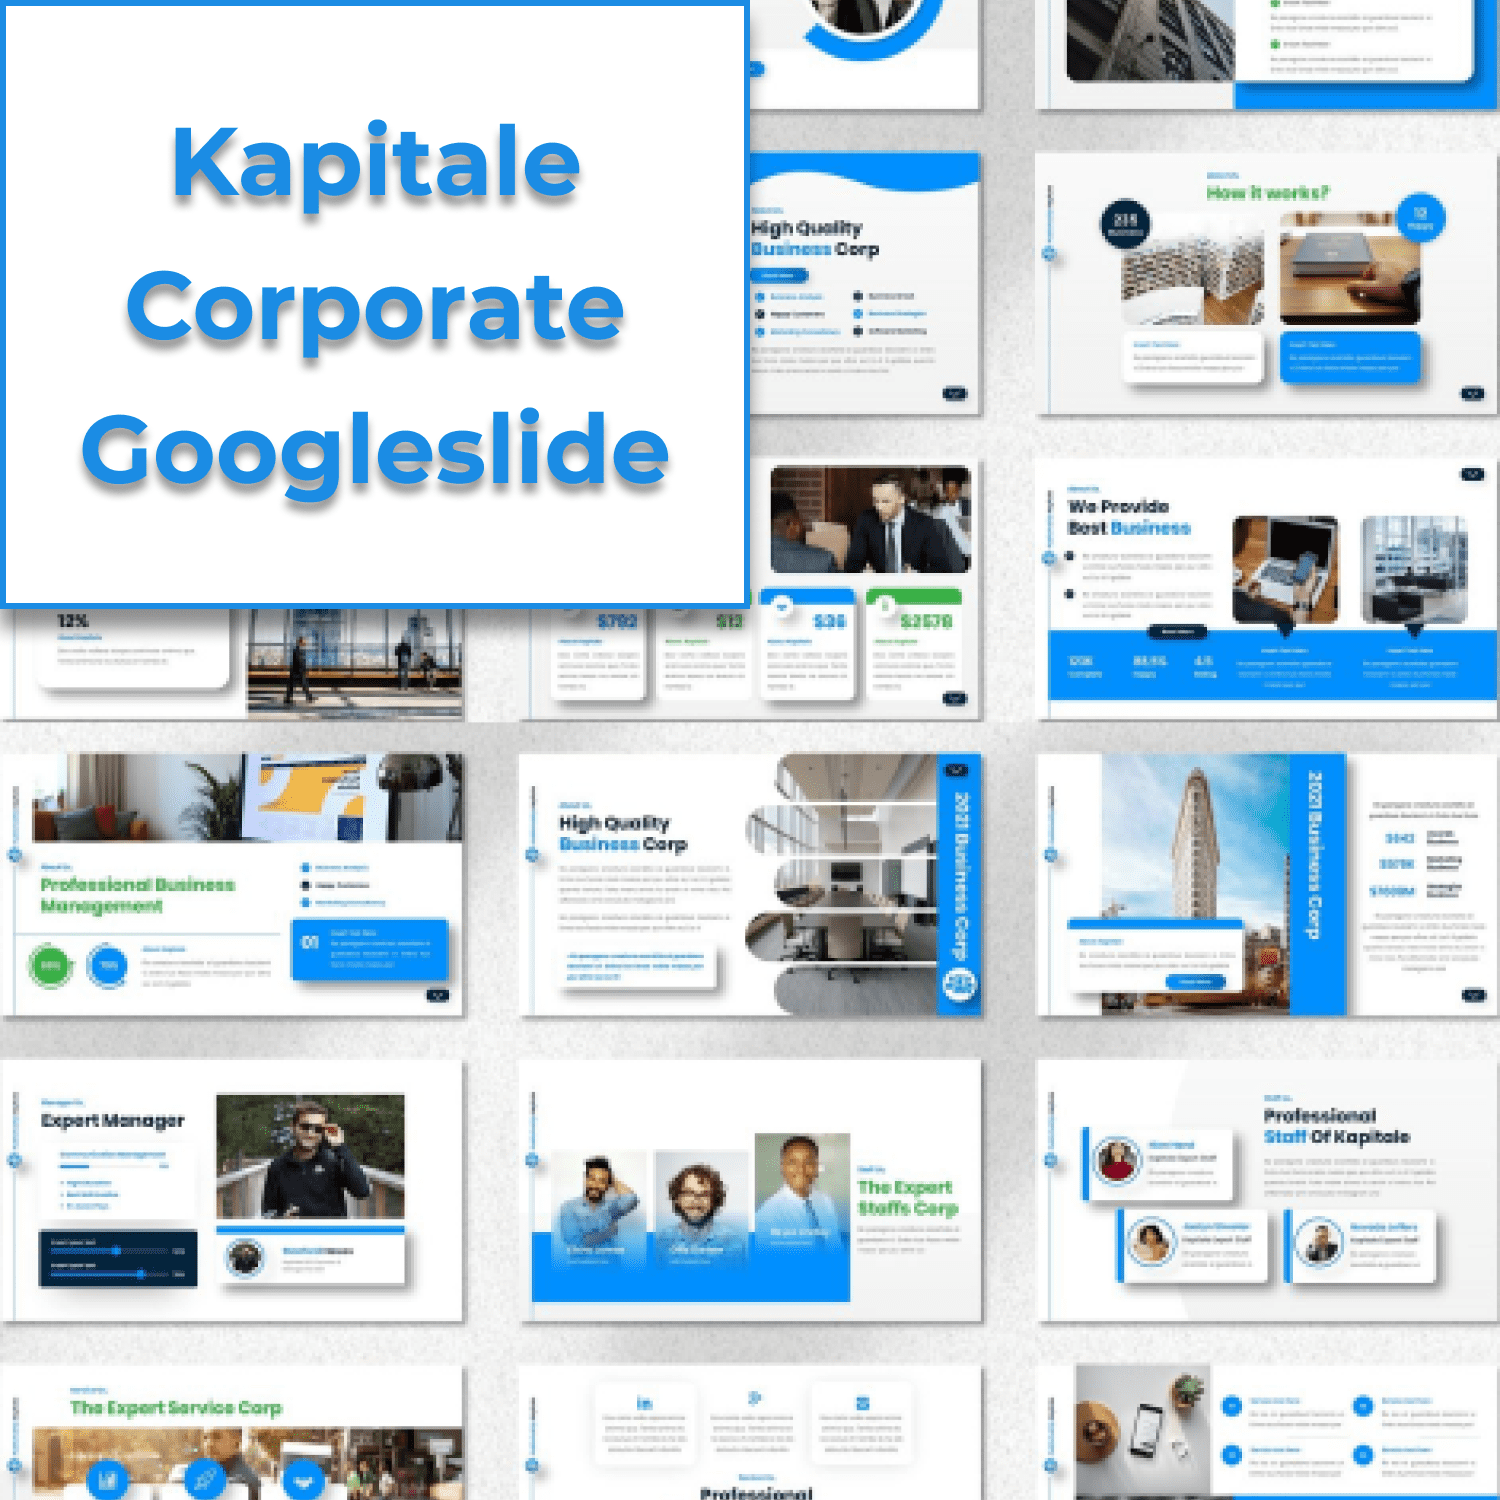 Kapitale - Corporate Googleslide cover image.